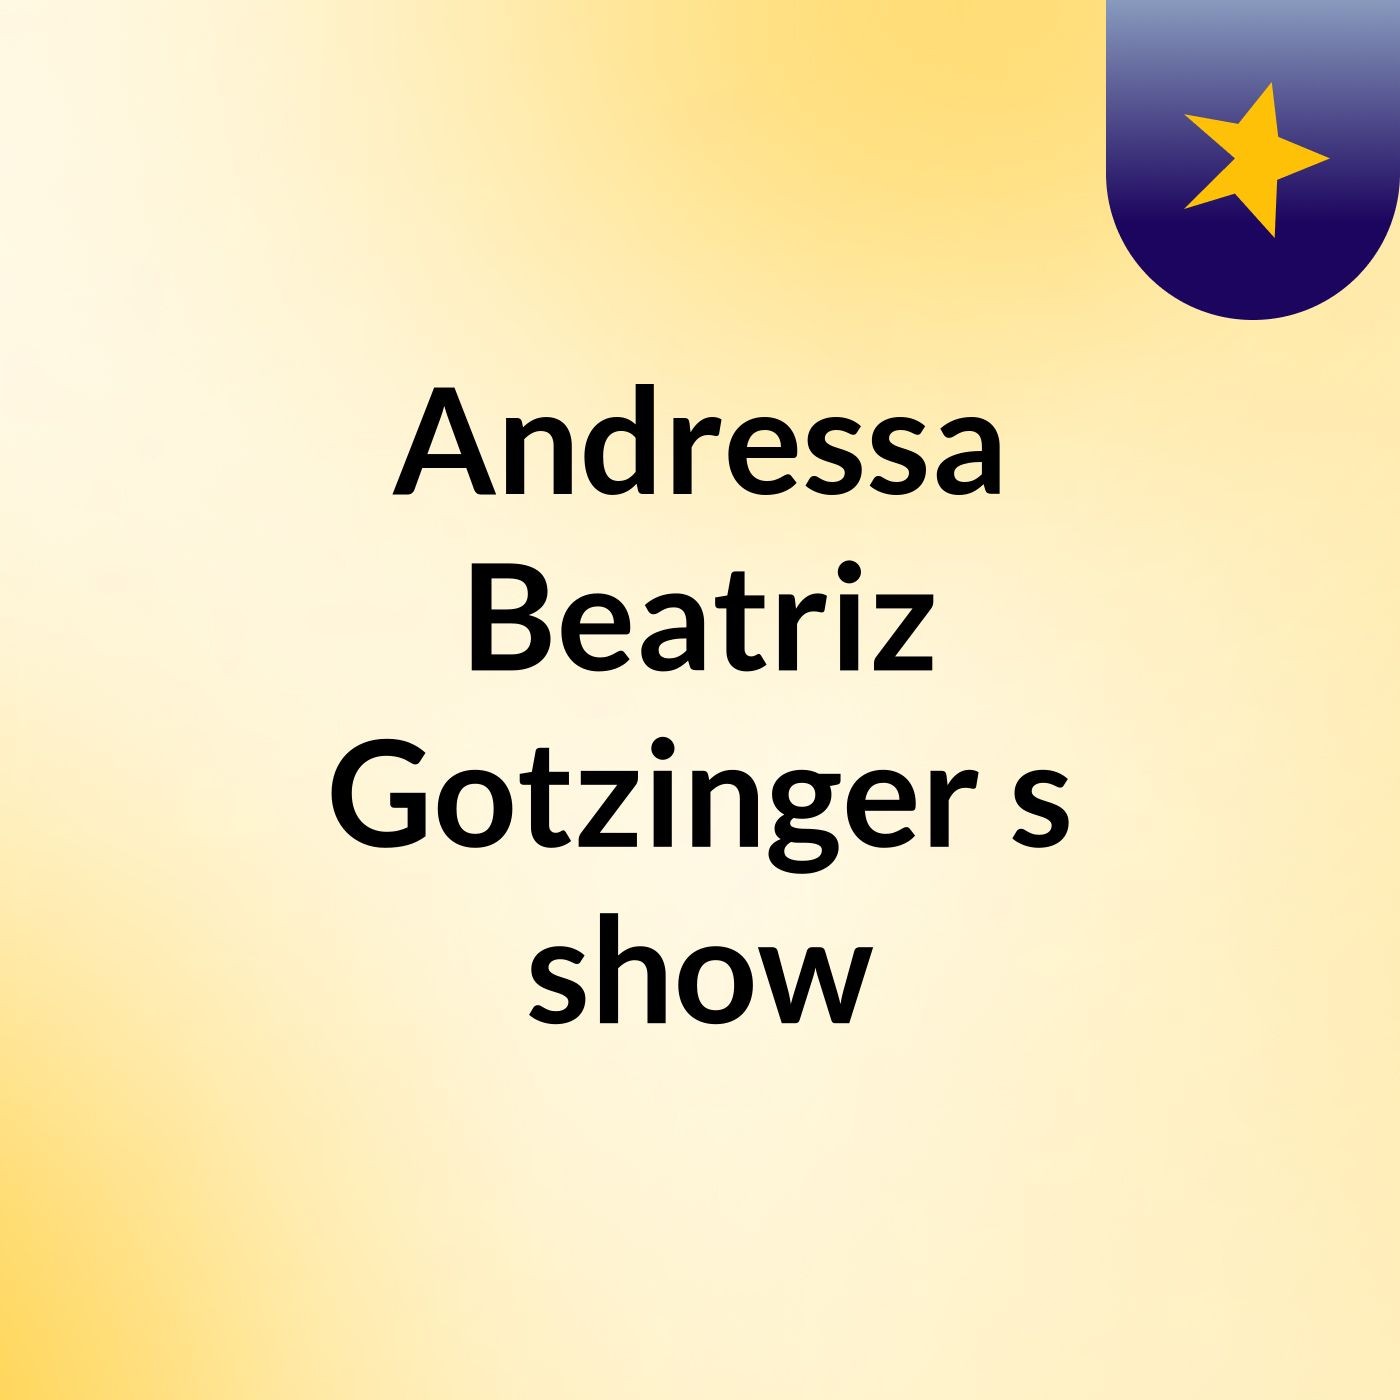 Andressa Beatriz Gotzinger's show